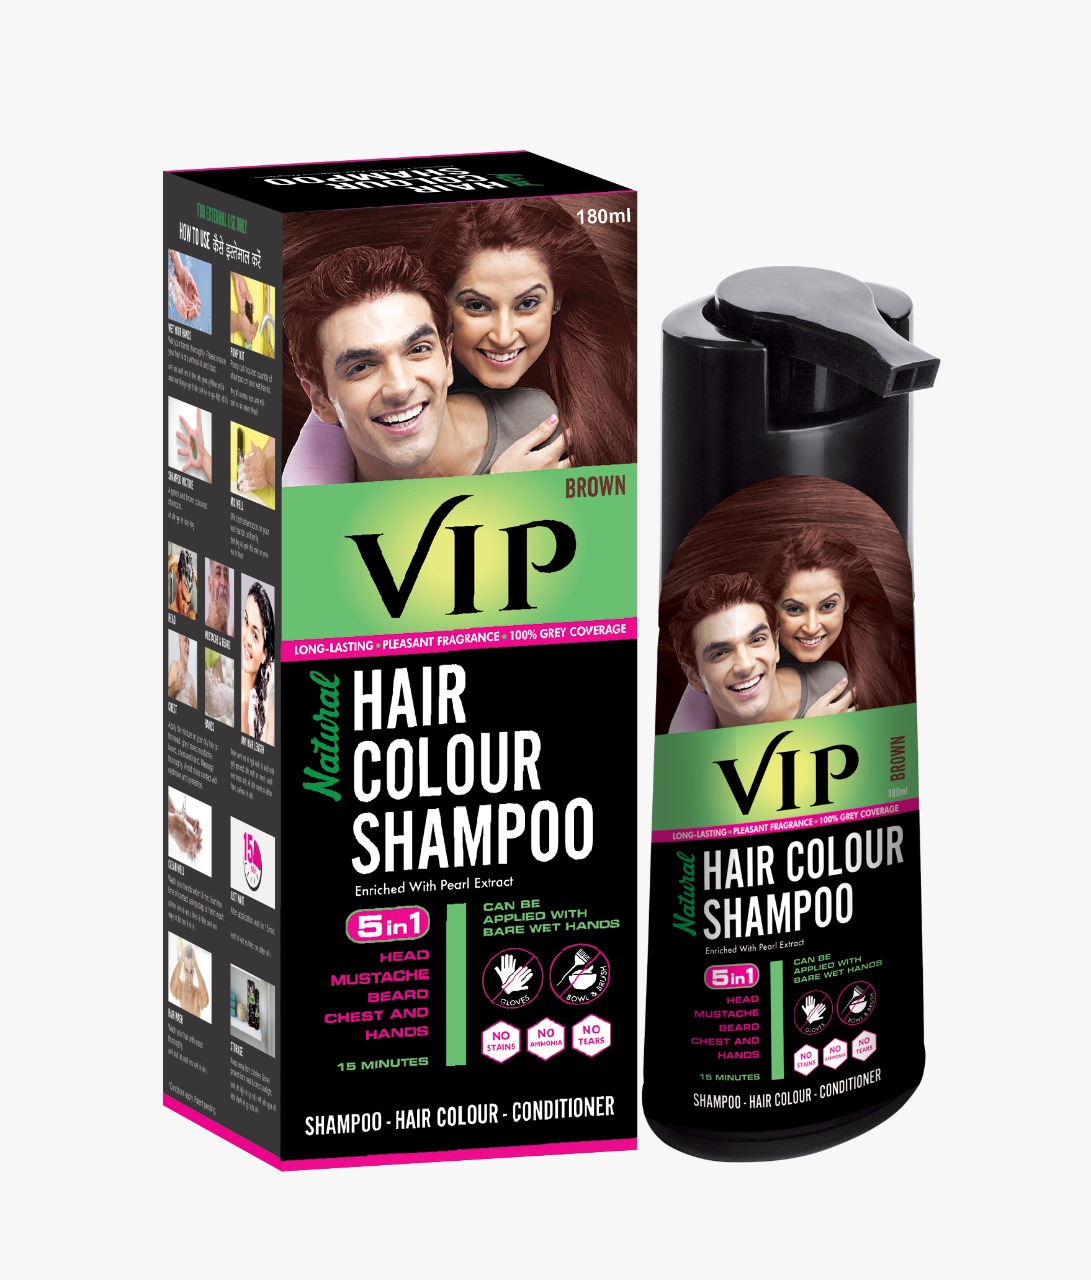 VIP Hair Colour Shampoo, 180ml Brown from Buy Happy Marketing LLP